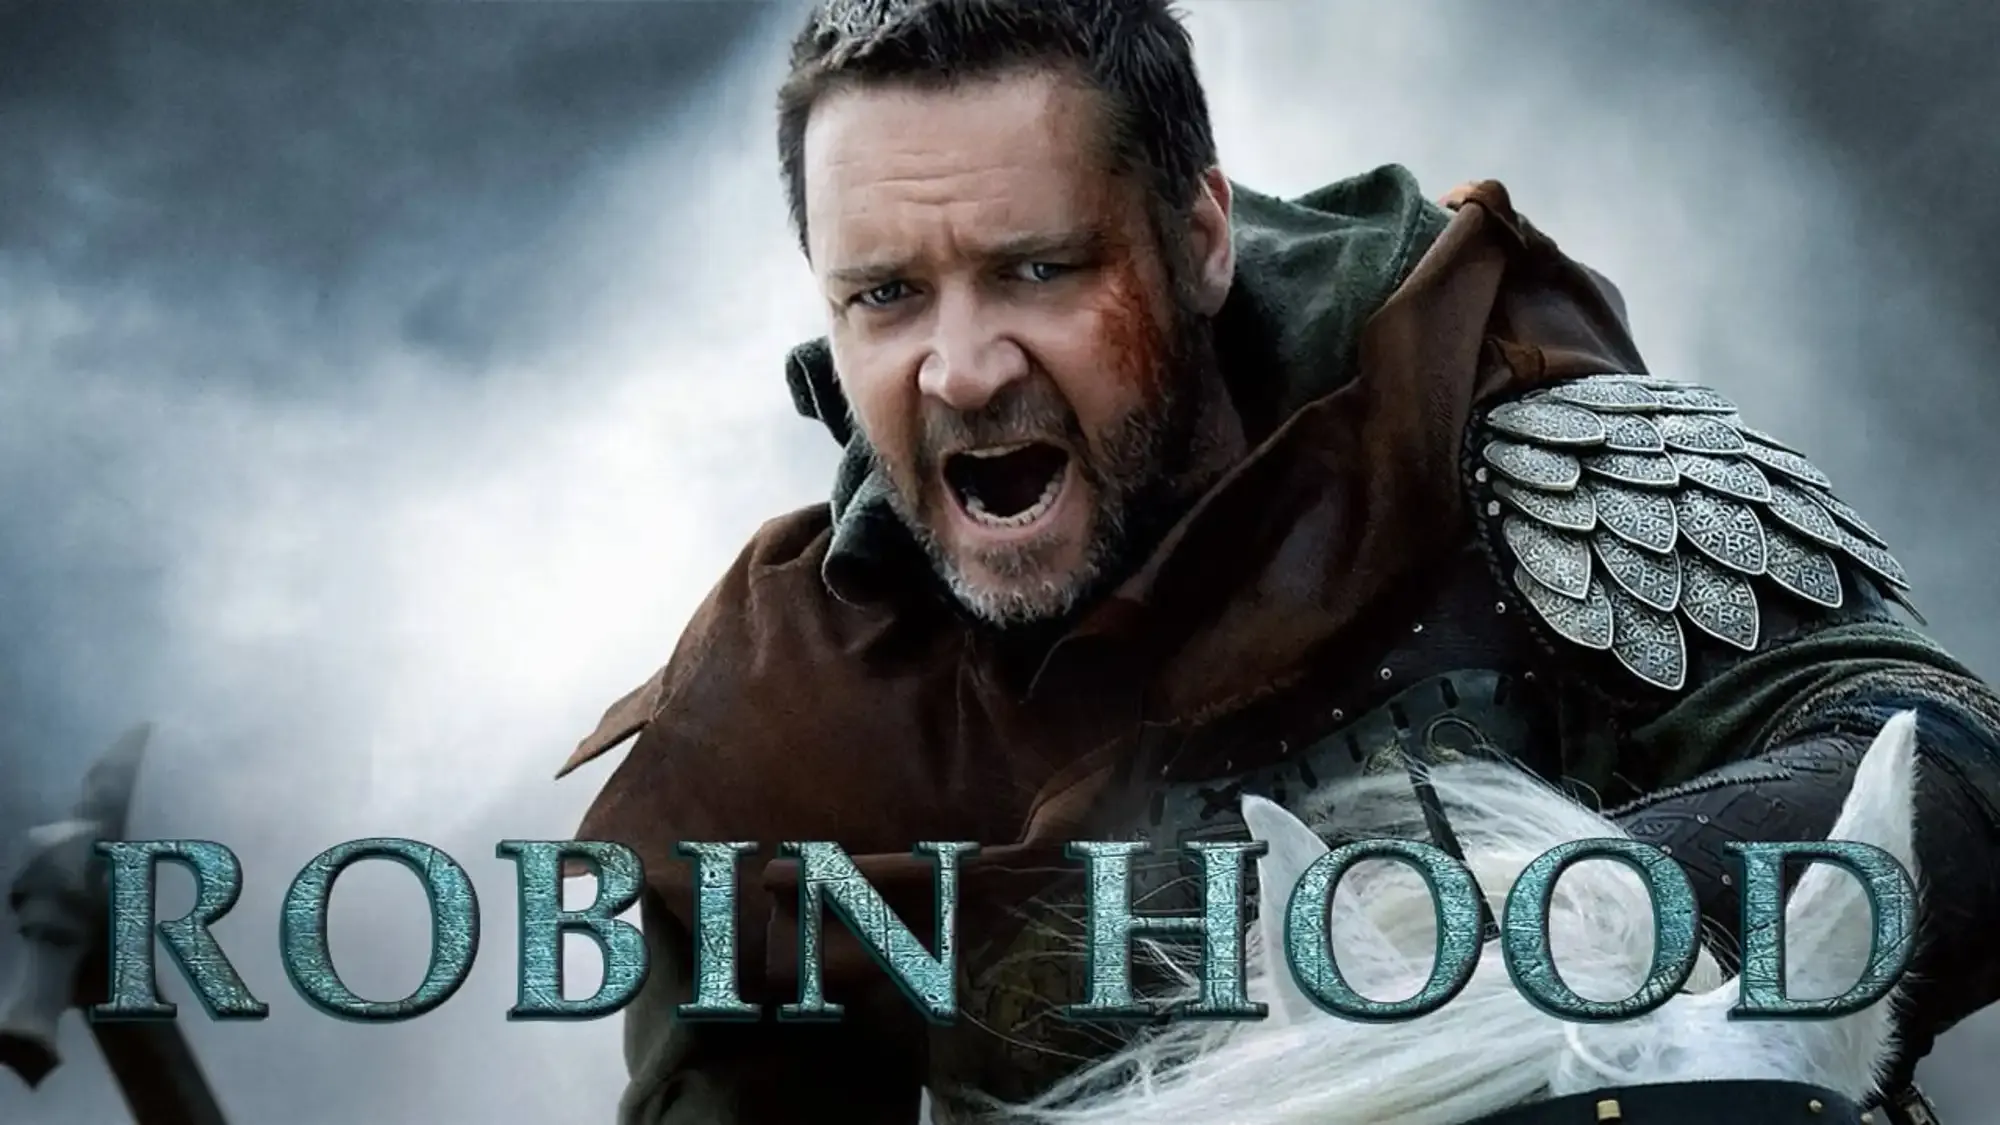 Robin Hood movie review